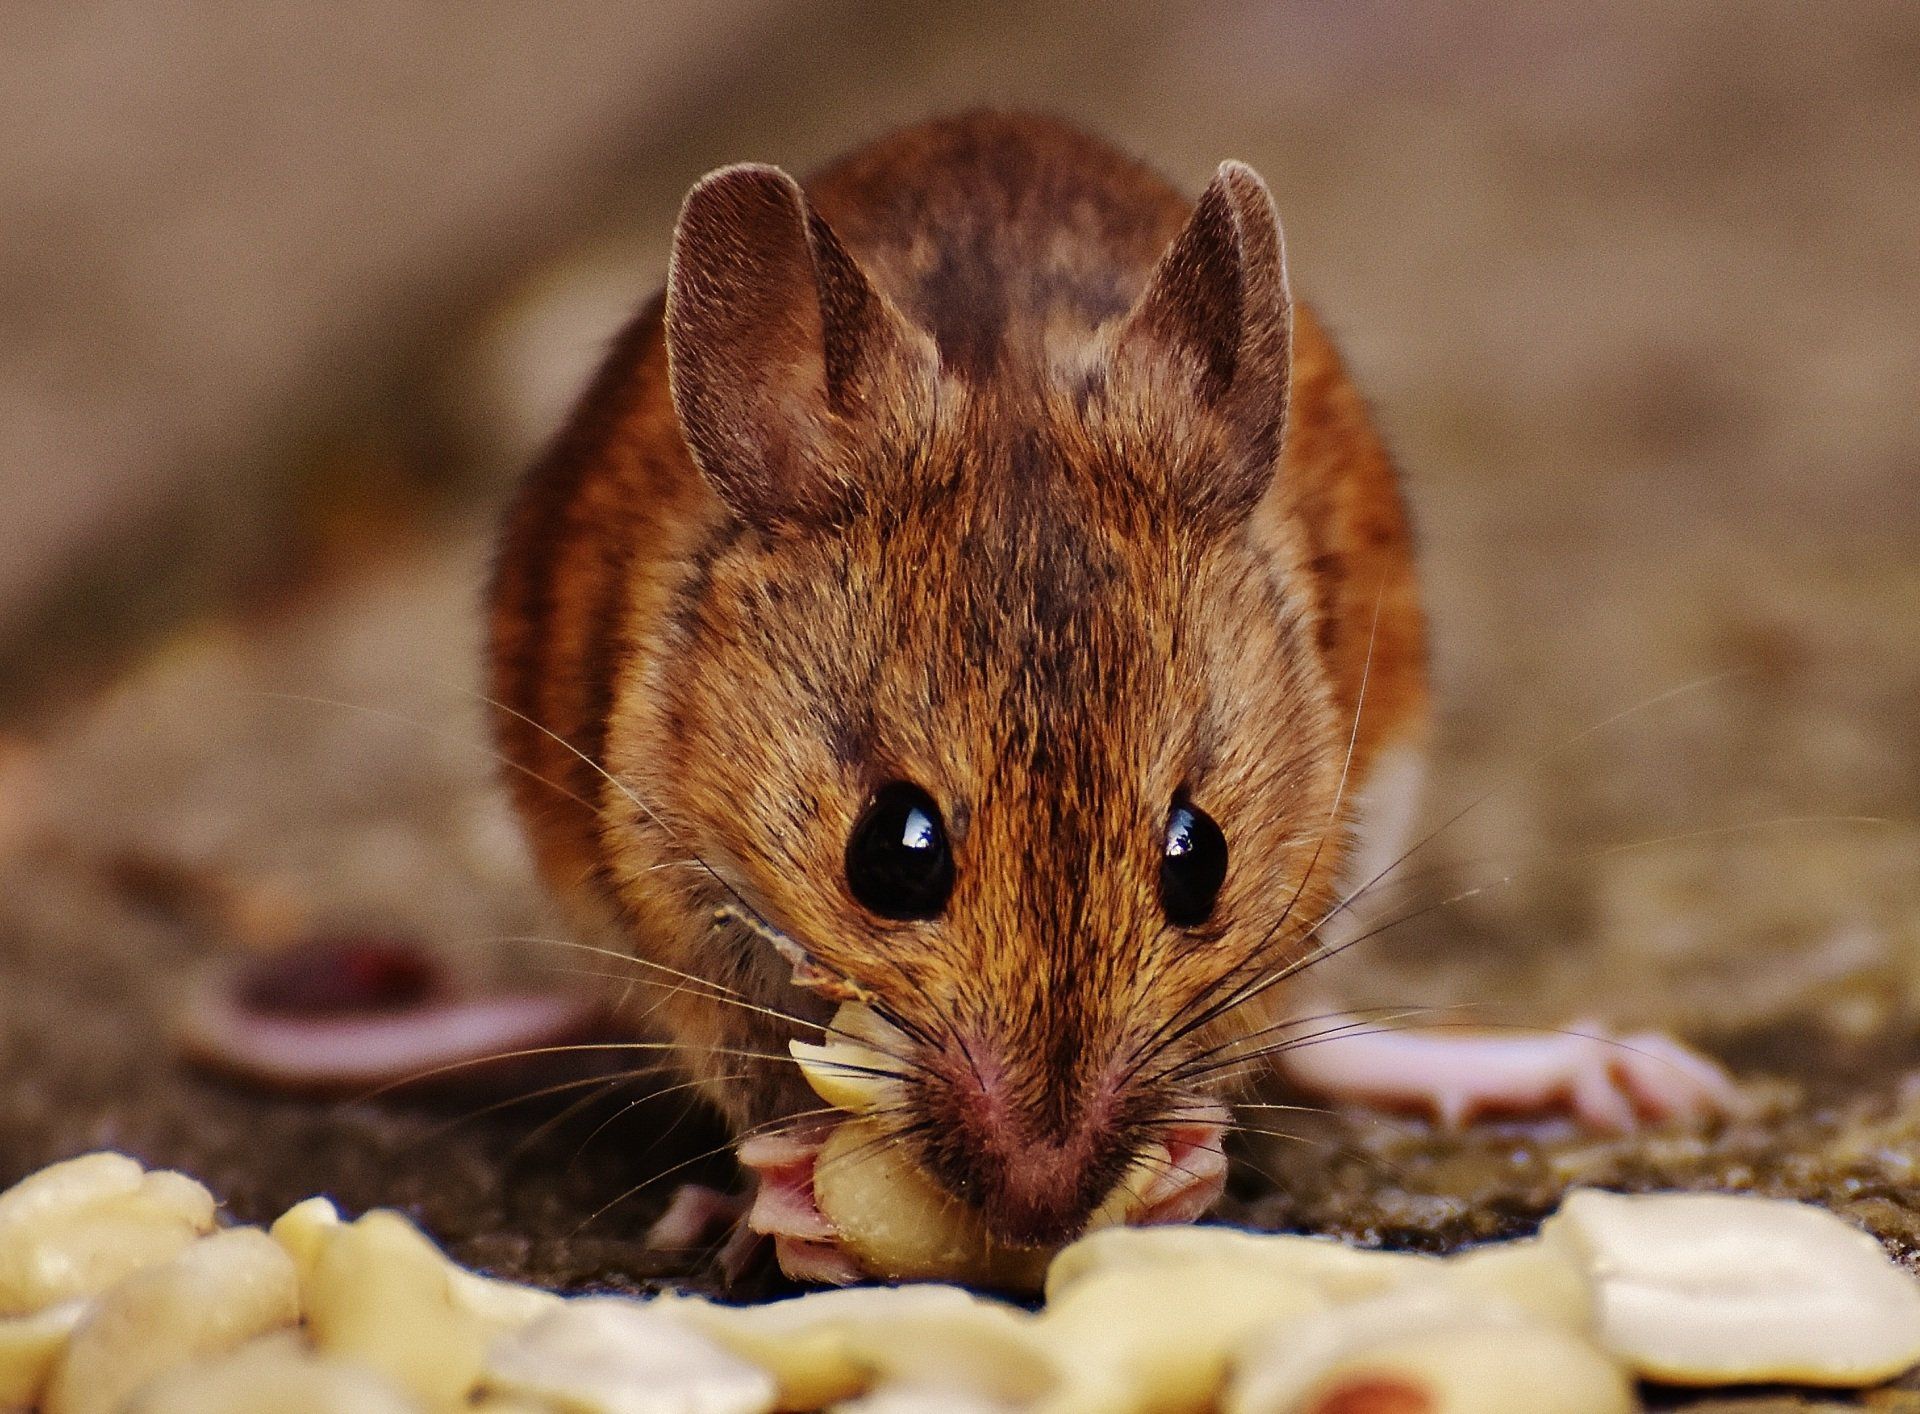 humane mouse traps, lazy cats, best peanut butter, mom fails